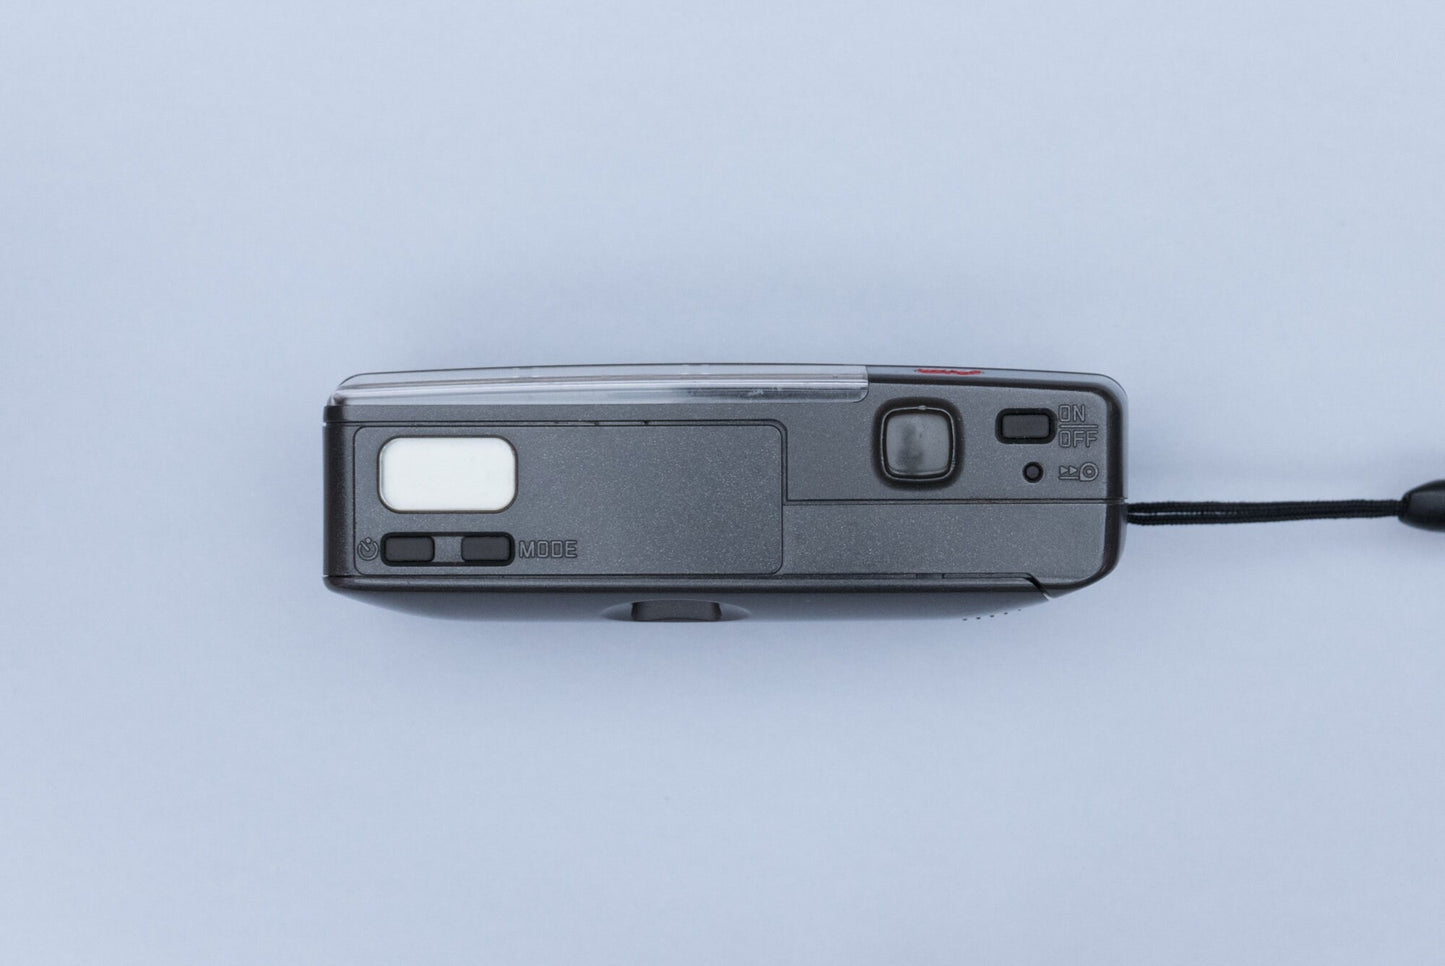 Leica Mini Compact 35mm Film Camera